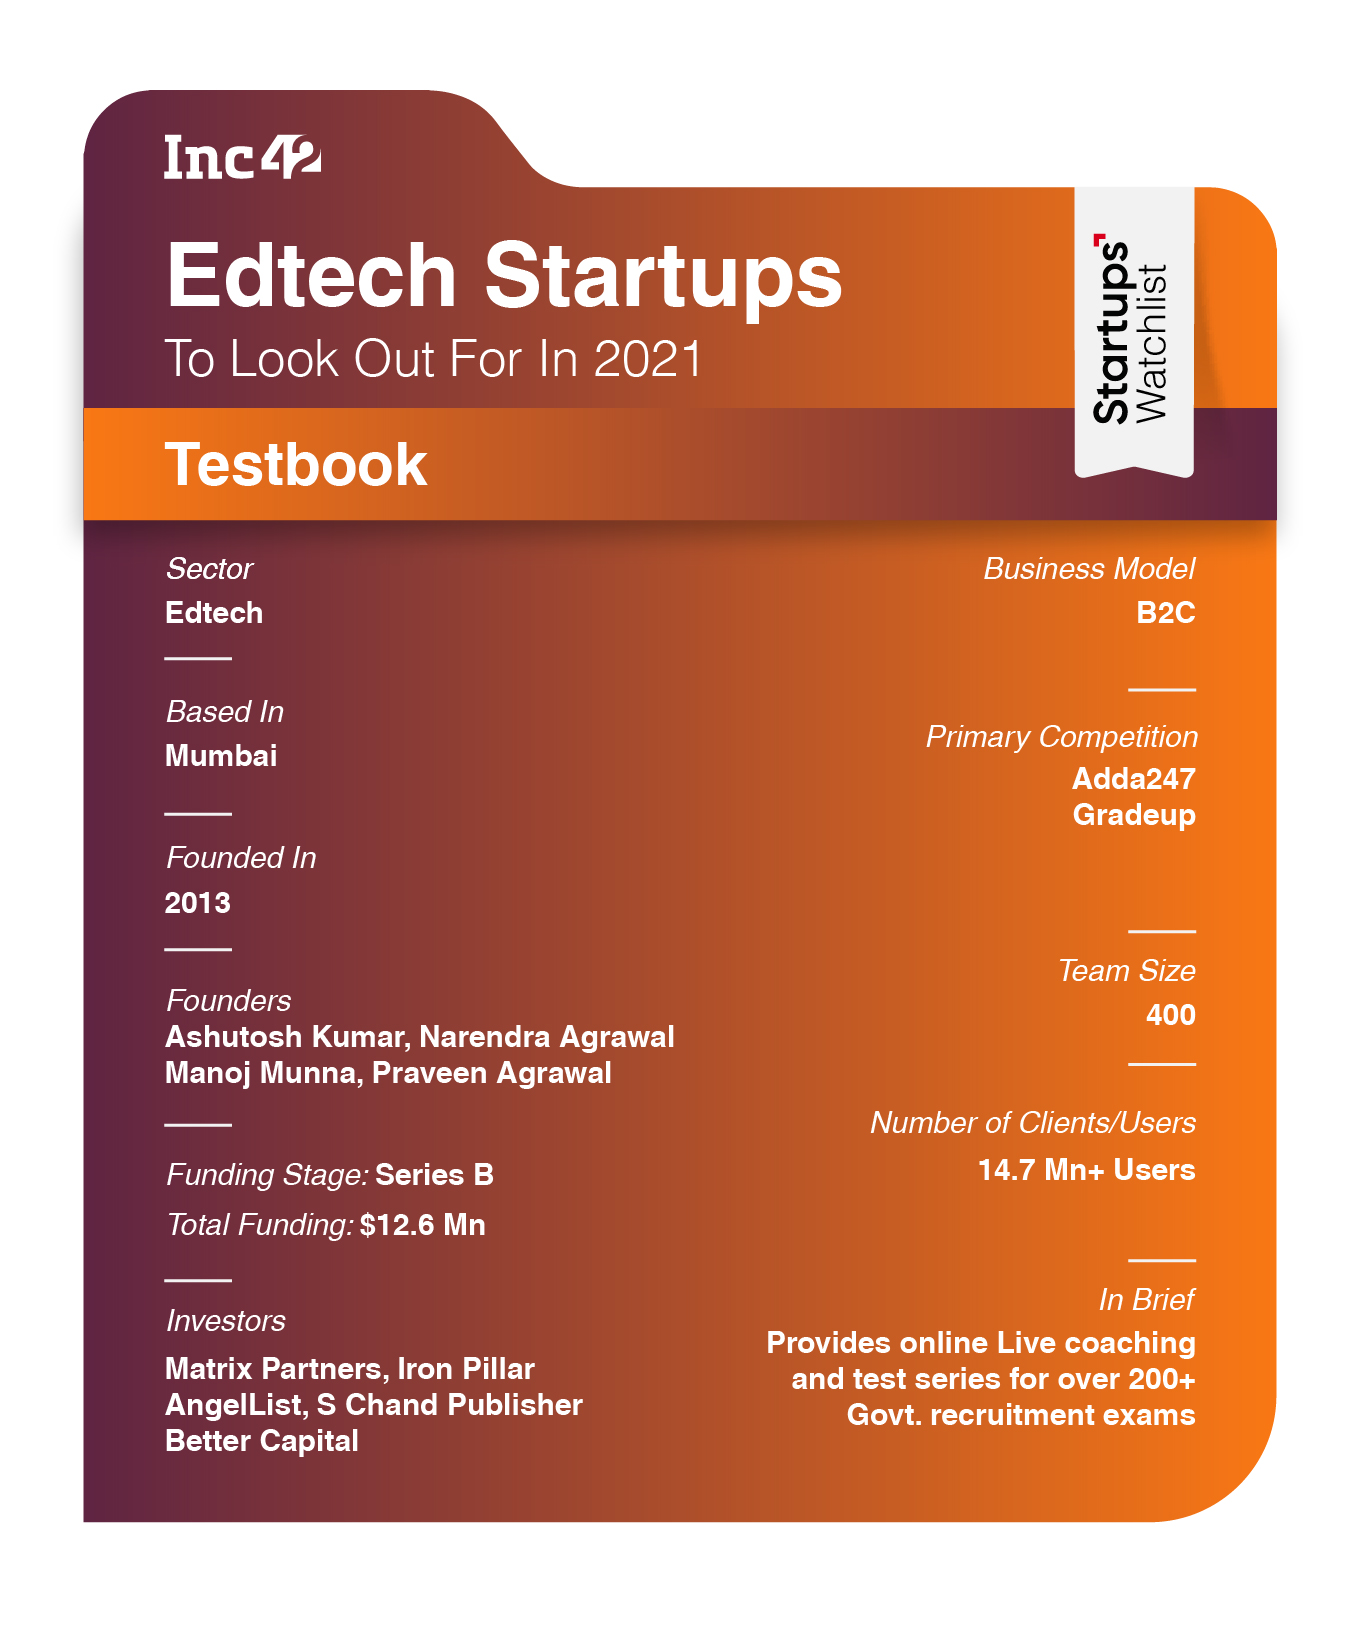 edtech startups in 2021